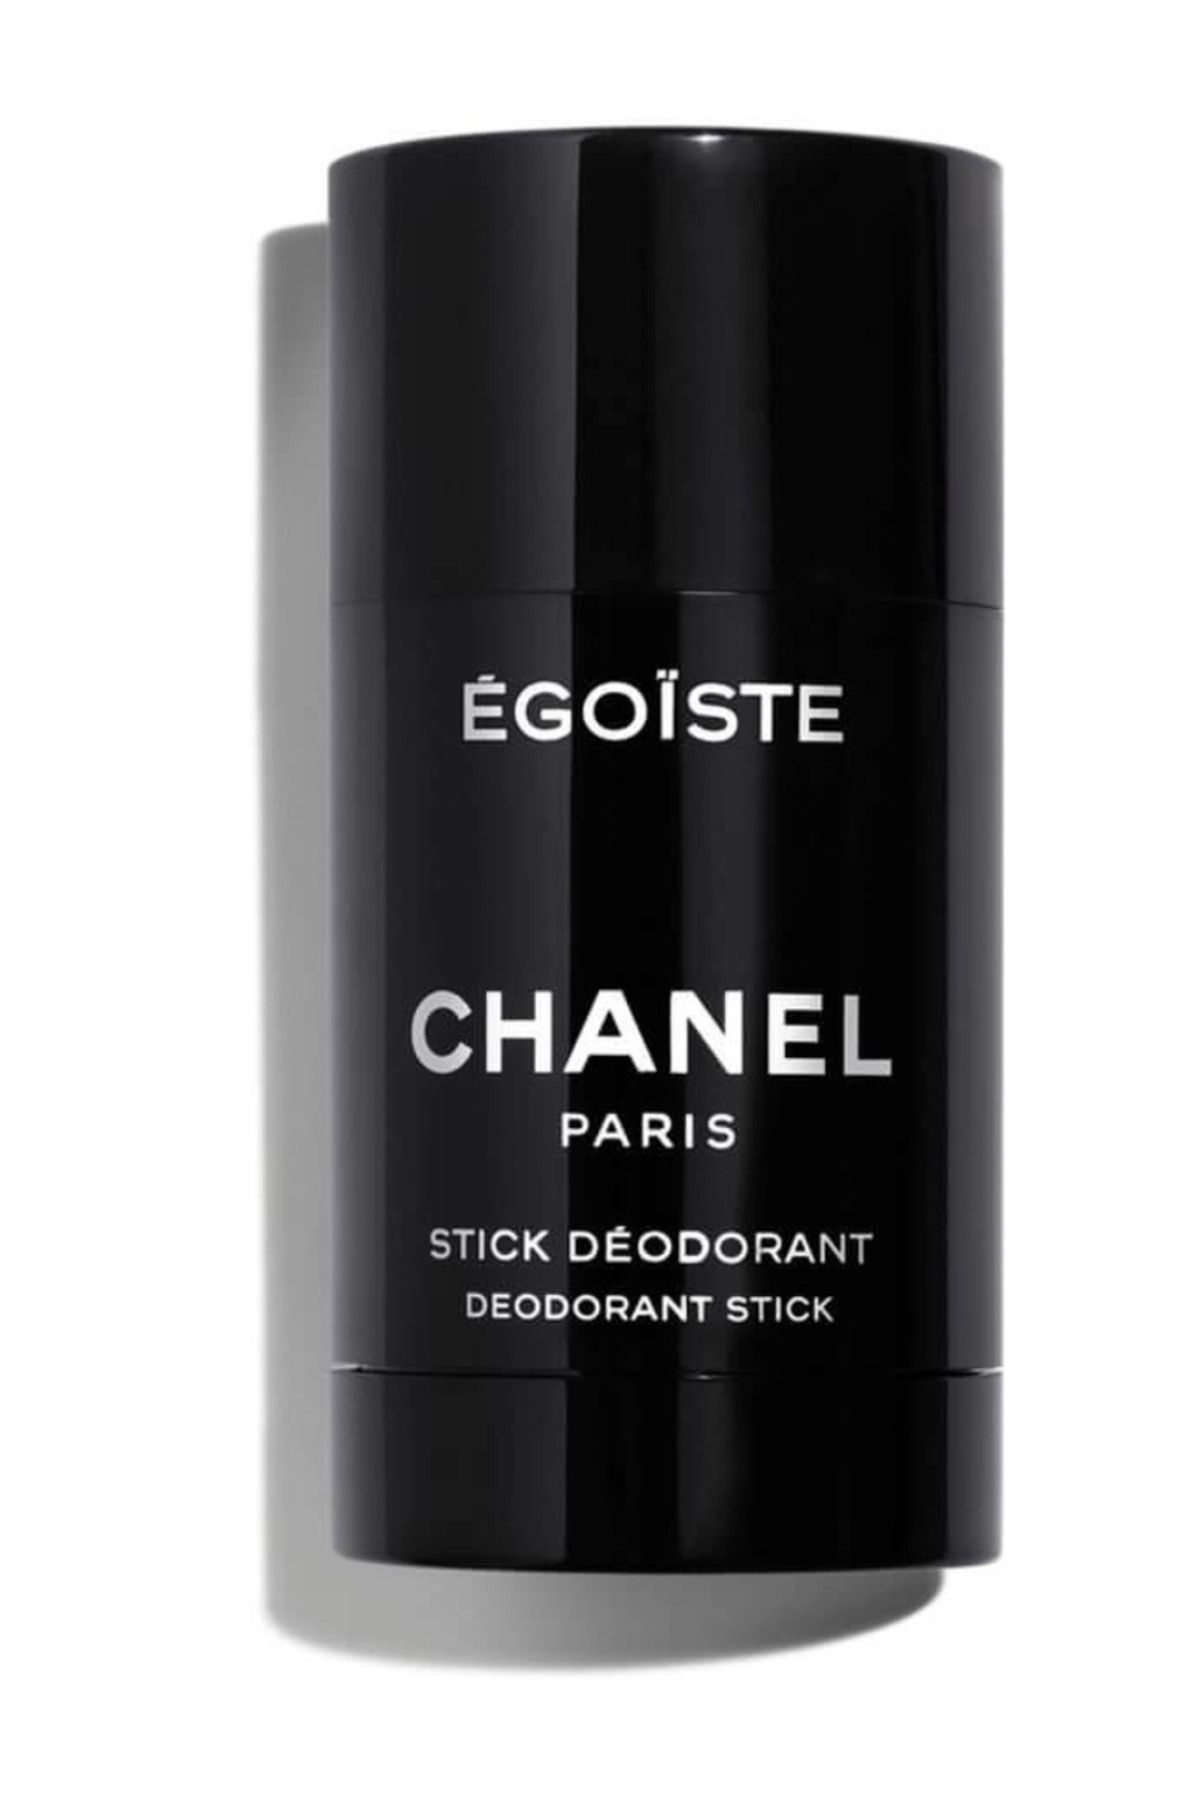 Chanel دئودورانت استیک Egoist ضد تعریق و ضد بوی بد عرق خنک و دلنشین